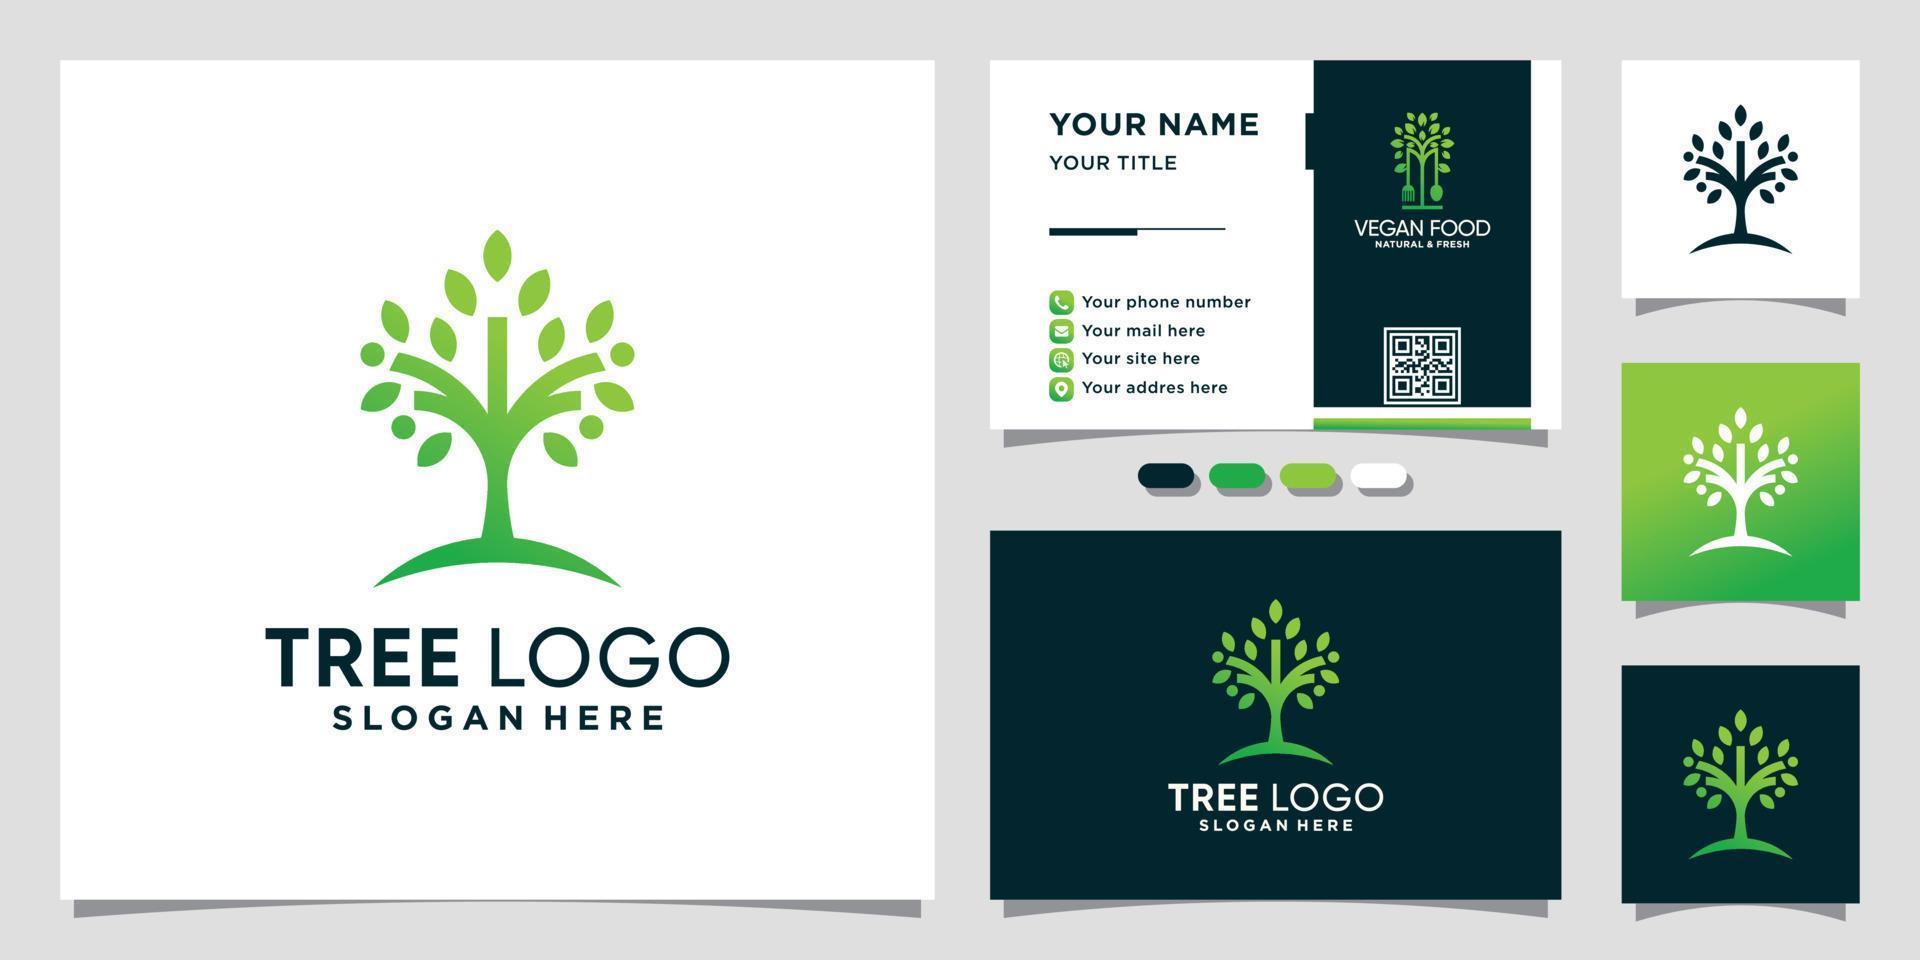 Tree nature logo with unique concept and business card design Premium Vector